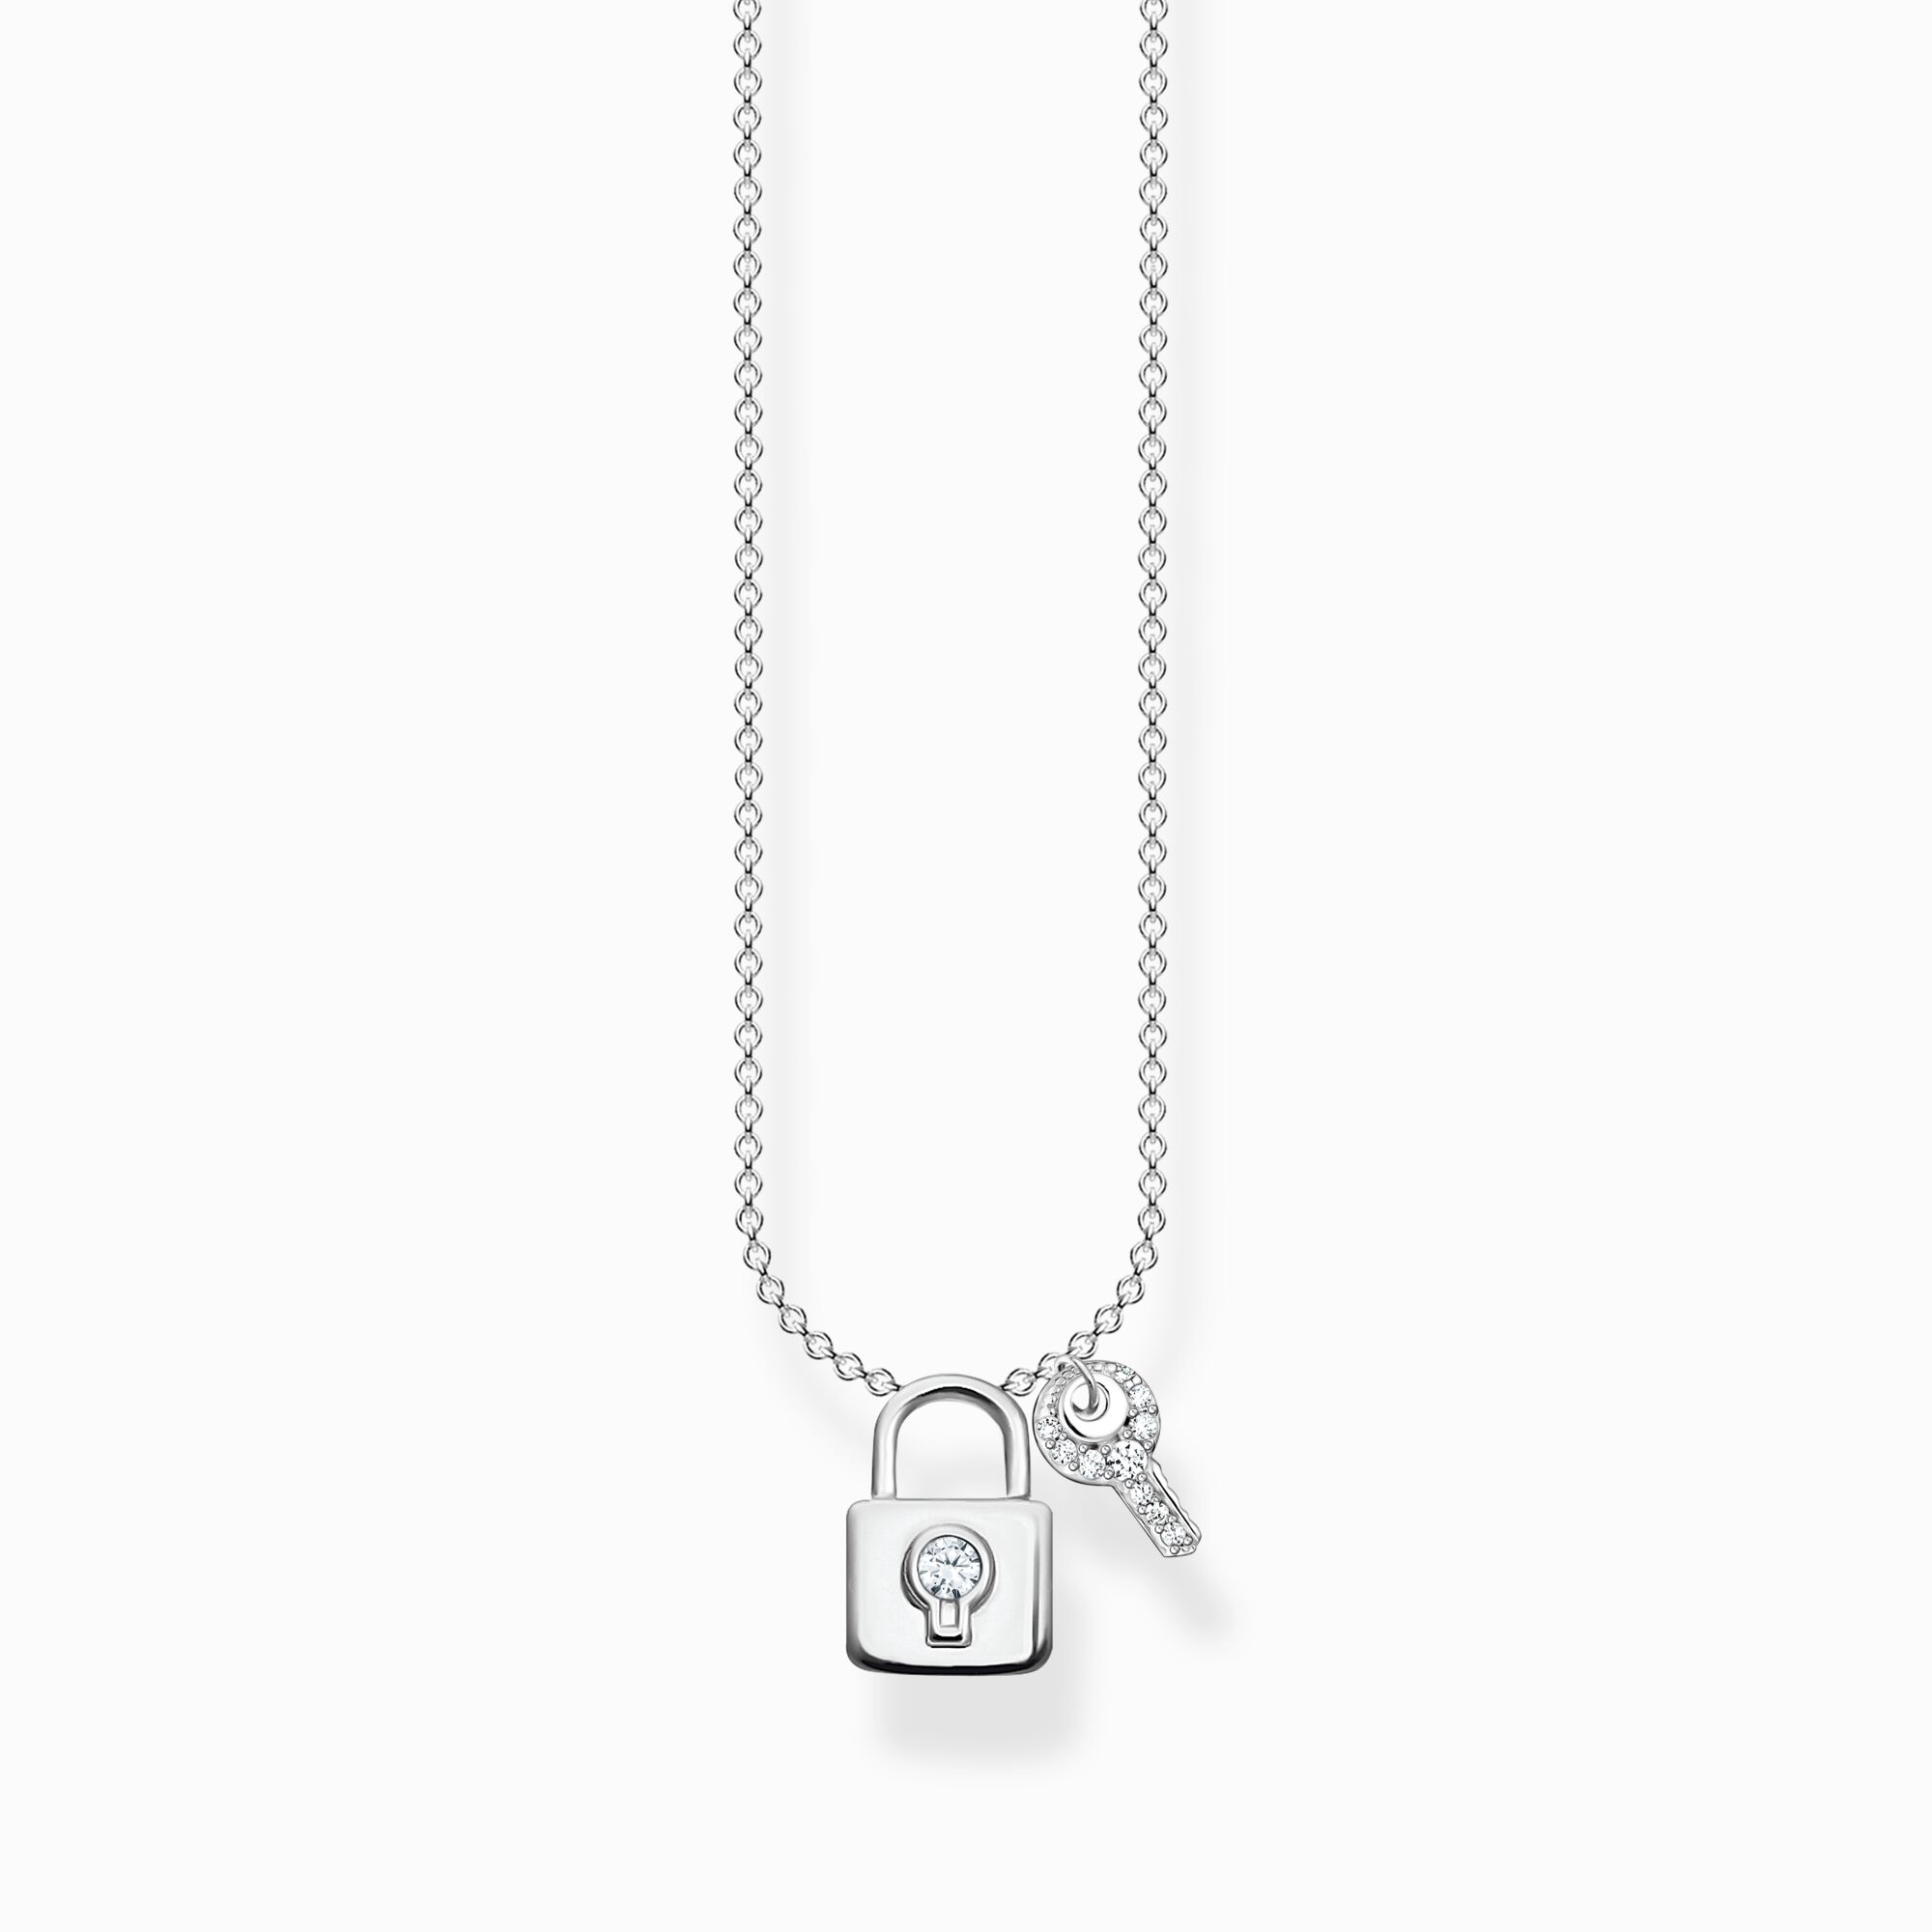 PANDORA + Lock and Key Necklace Set